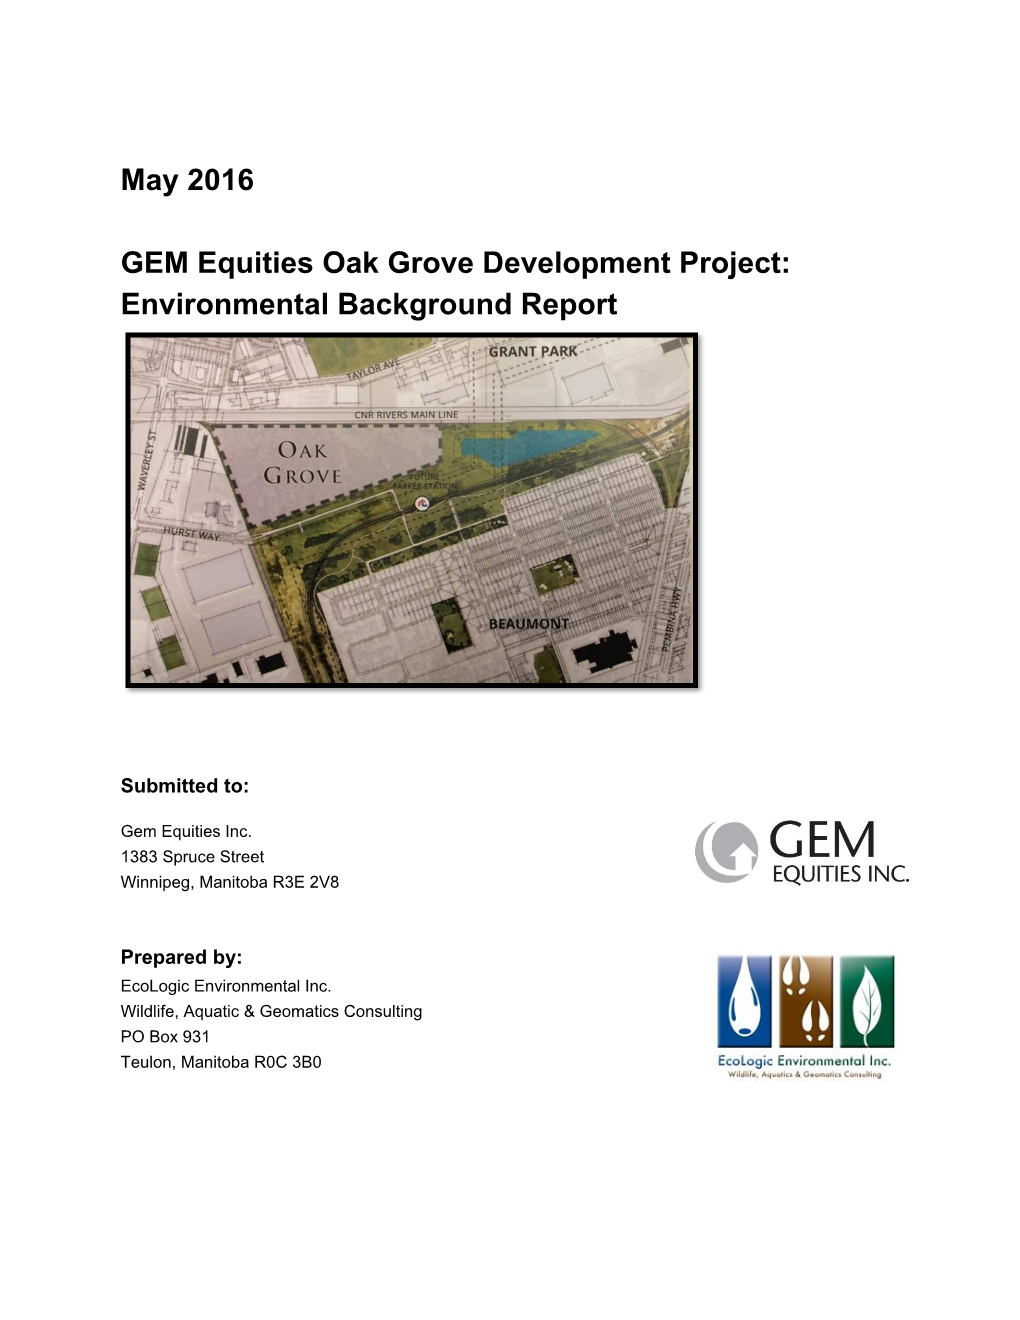 Environmental Background Report